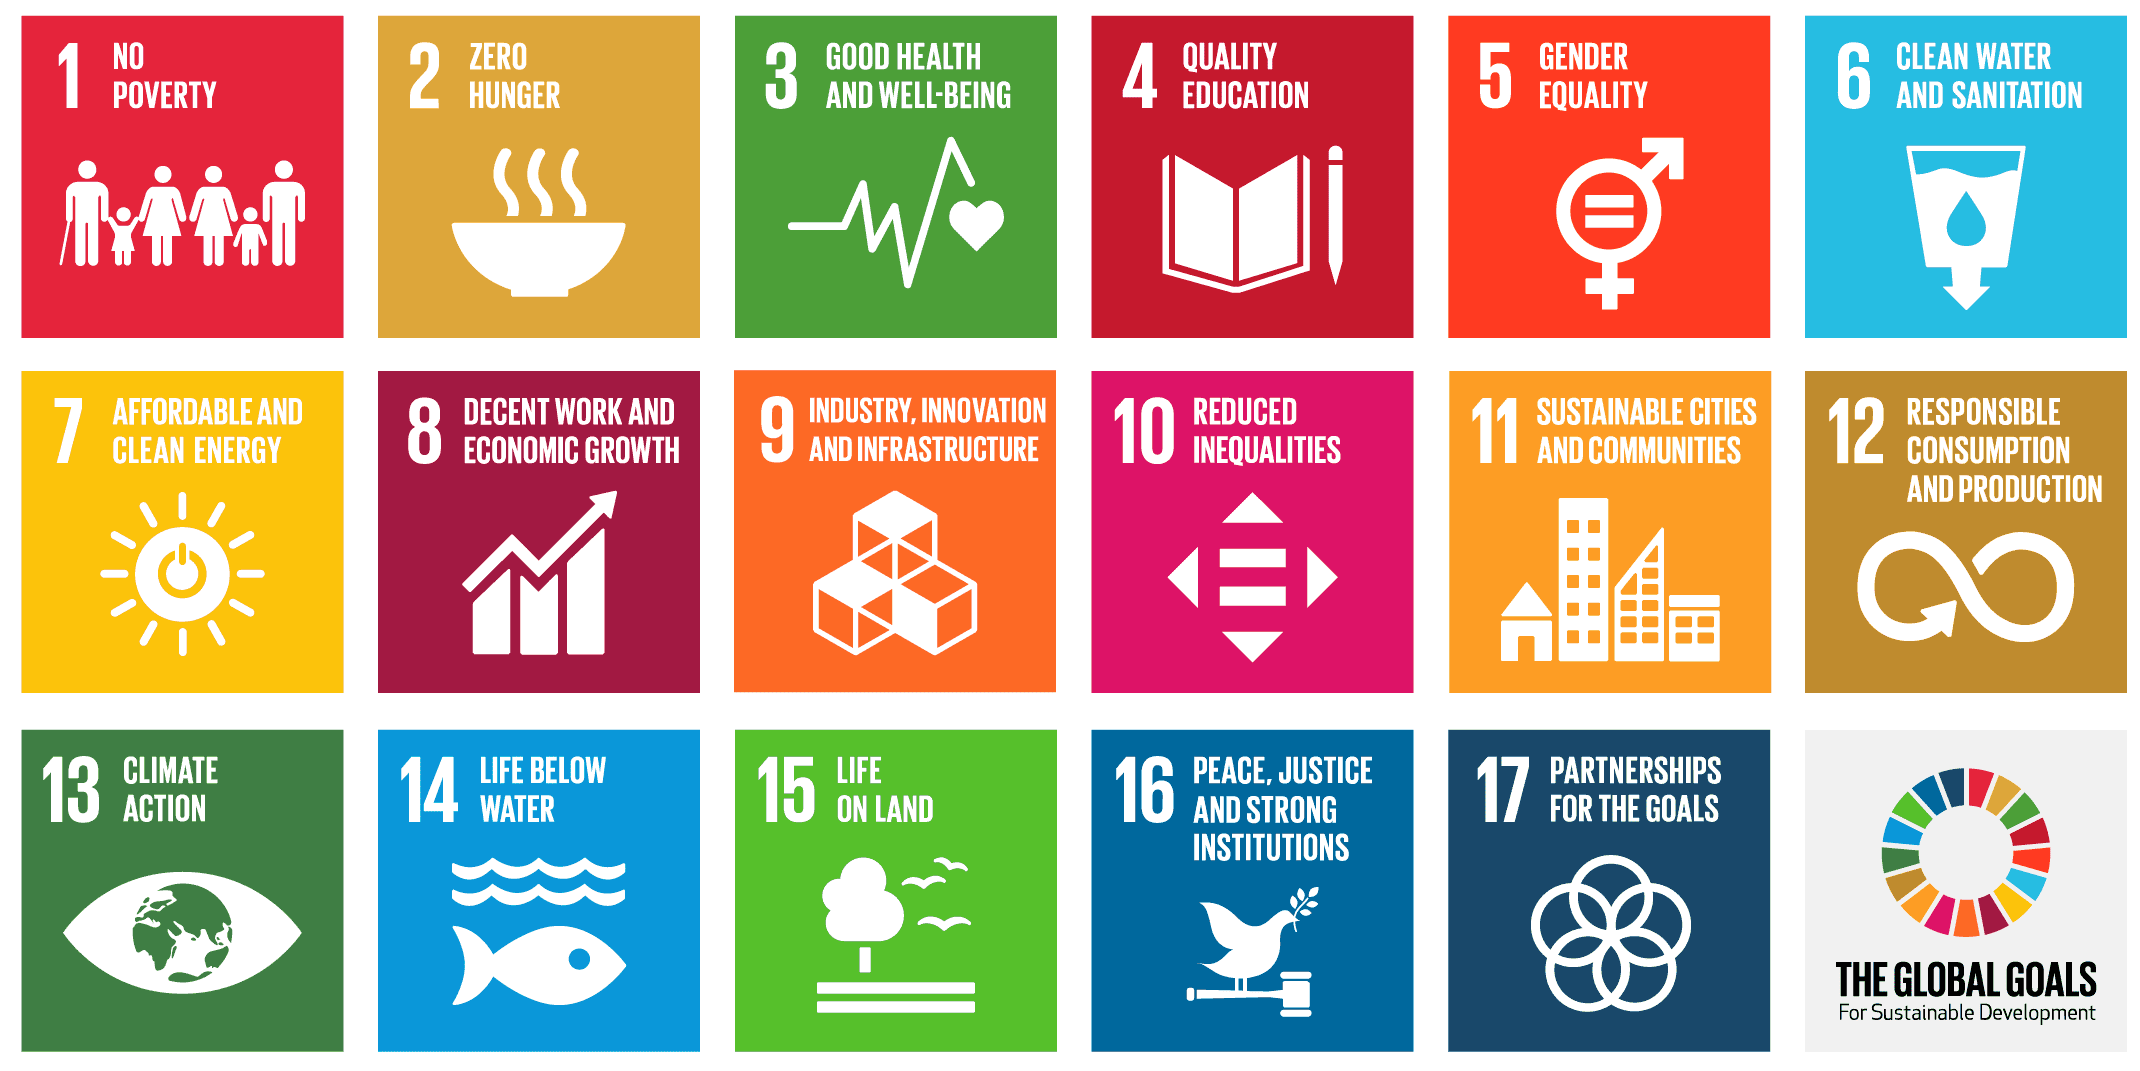 United Nations Sustainable Development Goals (SDGs) icon grid